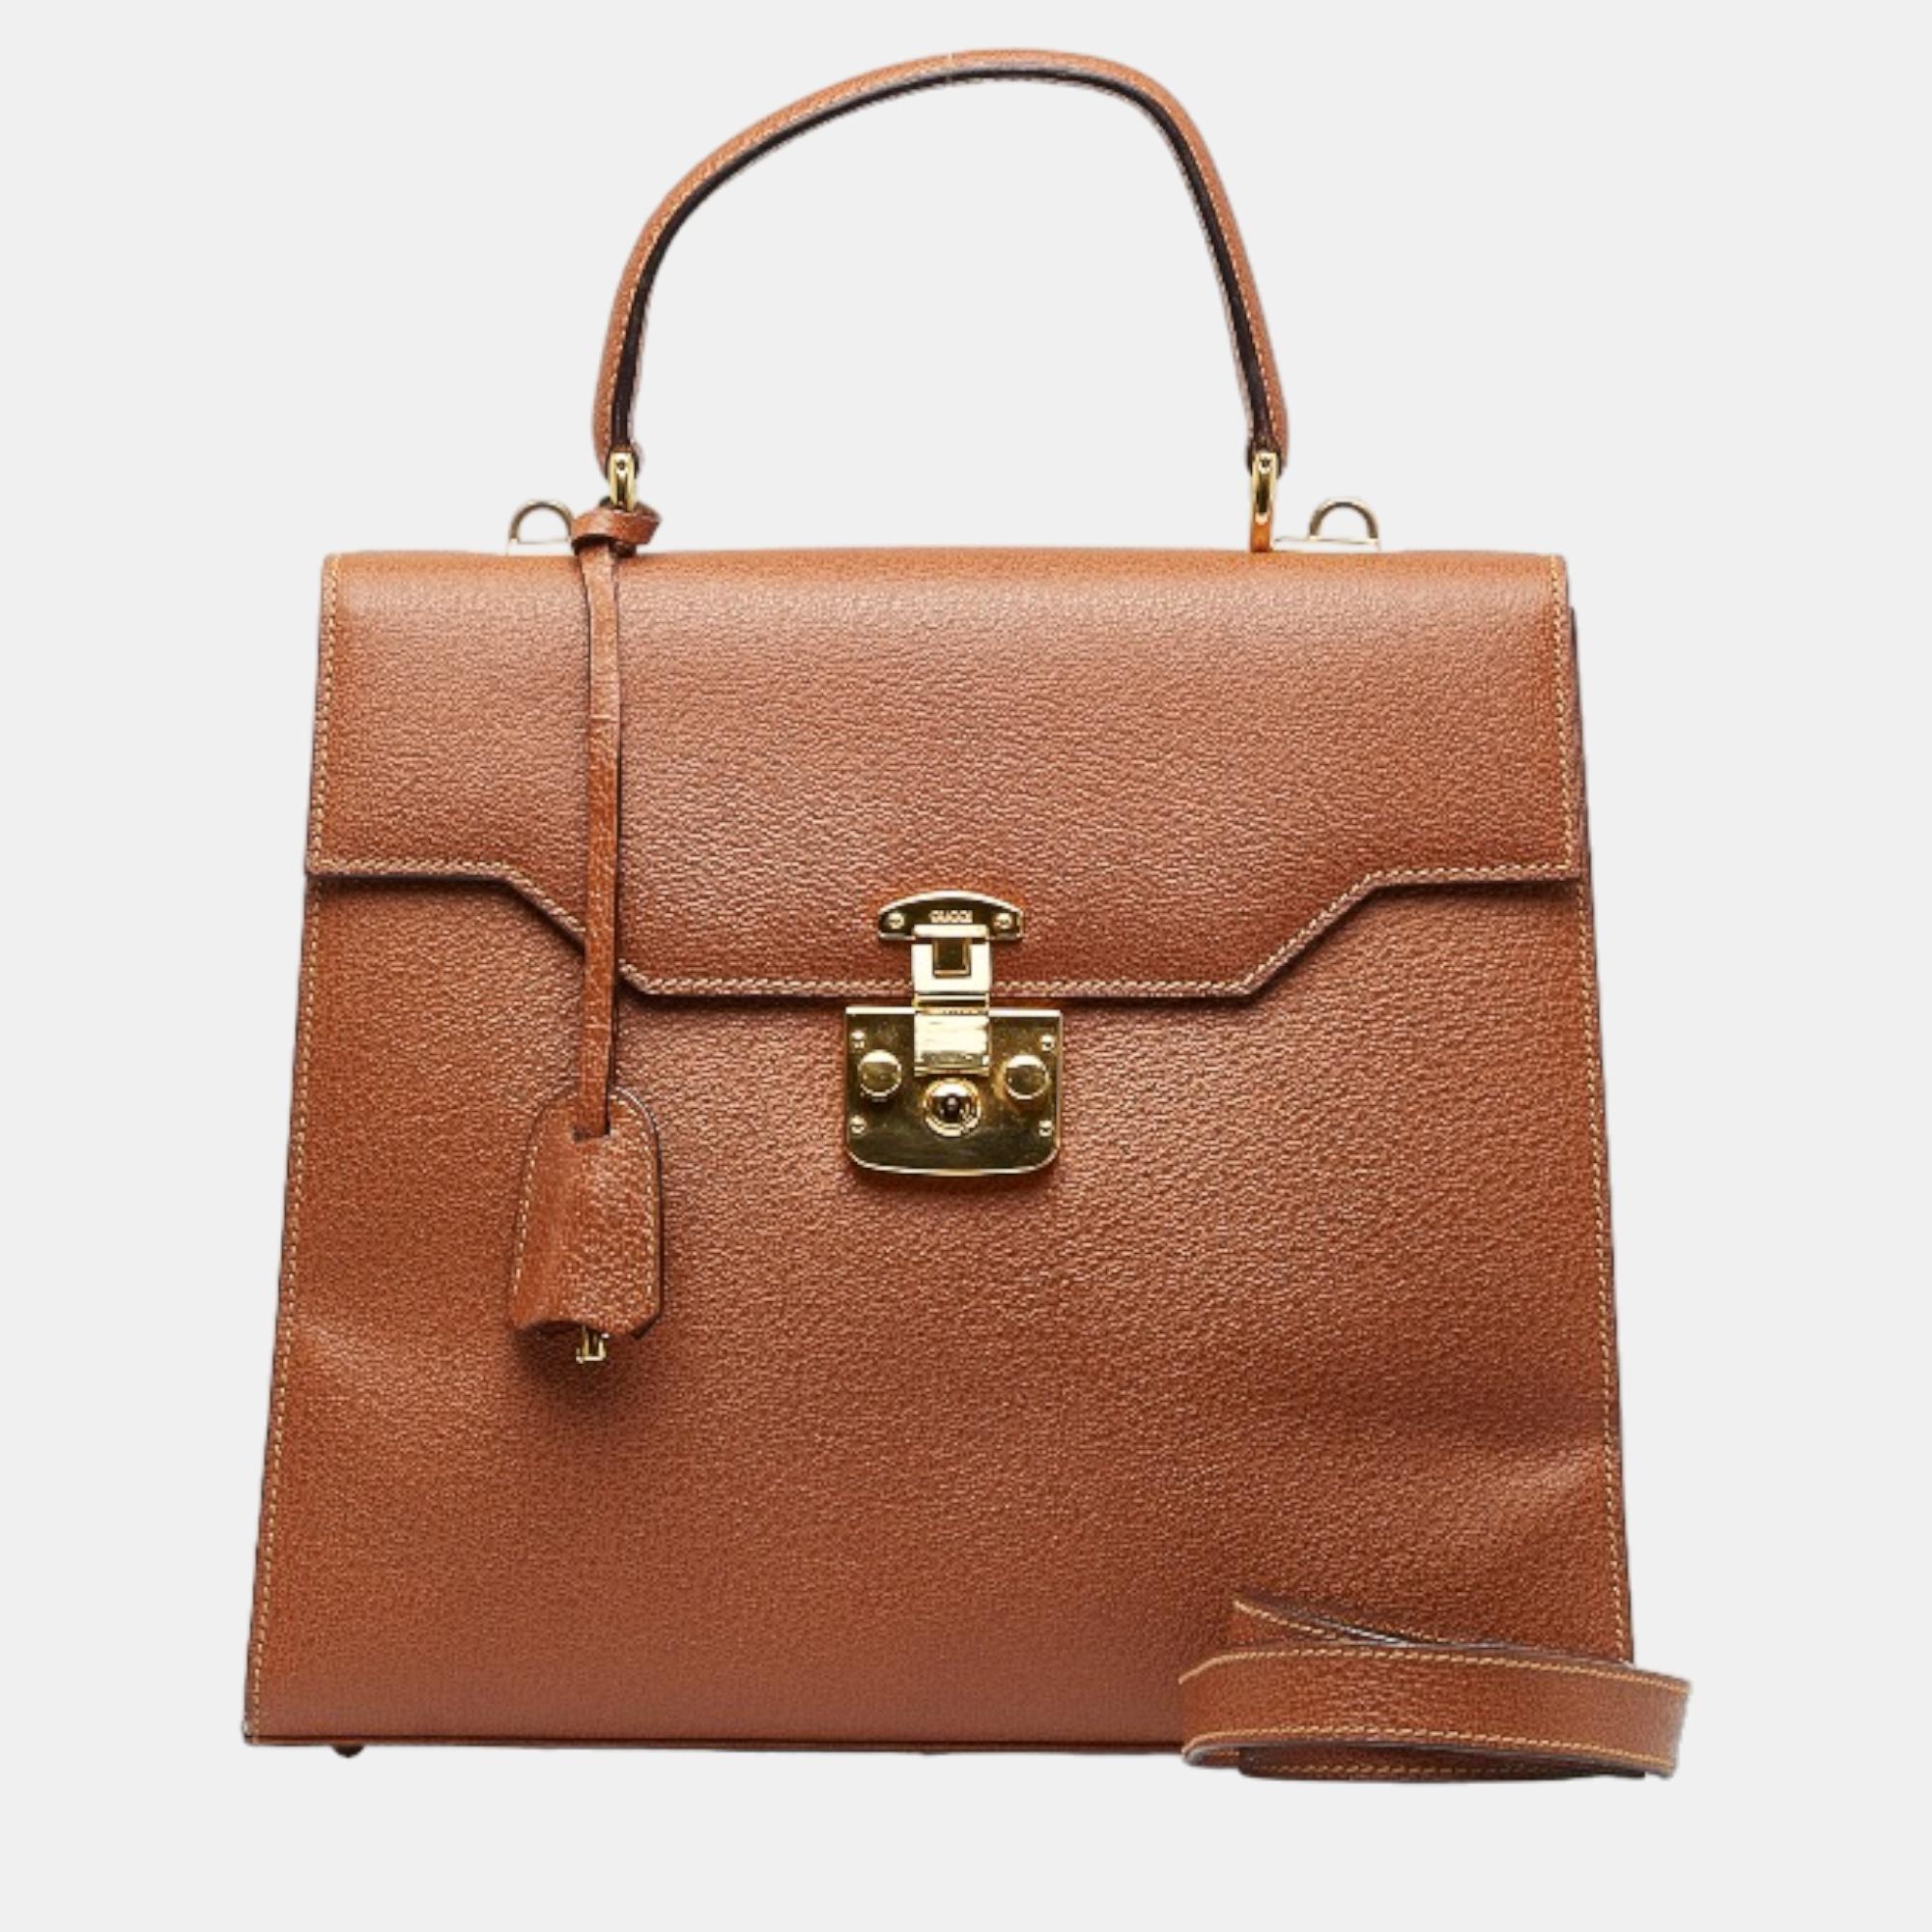 Gucci Brown Lady Lock Leather Handbag